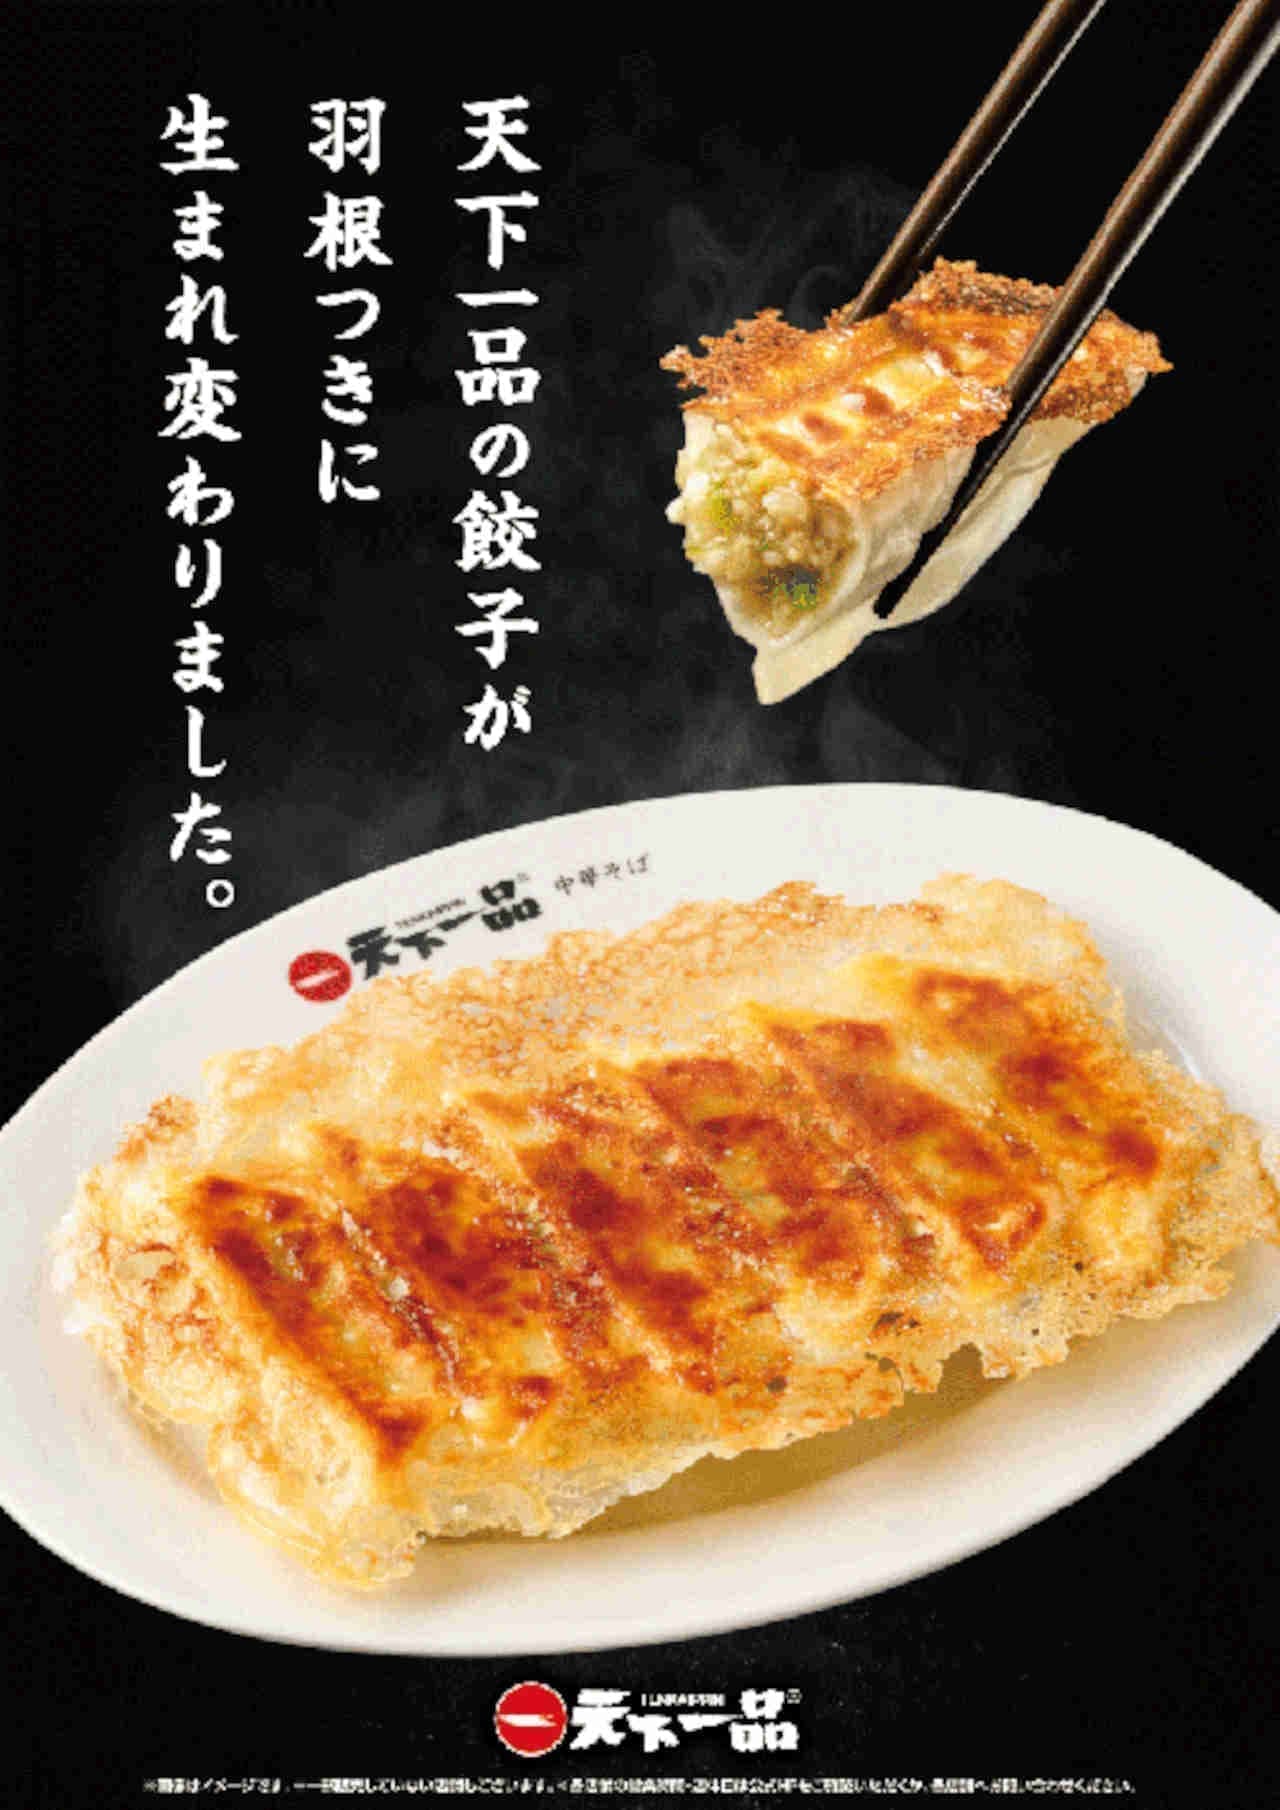 Tenka Ippin "Hane-tsuki Gyoza" and "Hane-tsuki Gyoza Set Meal